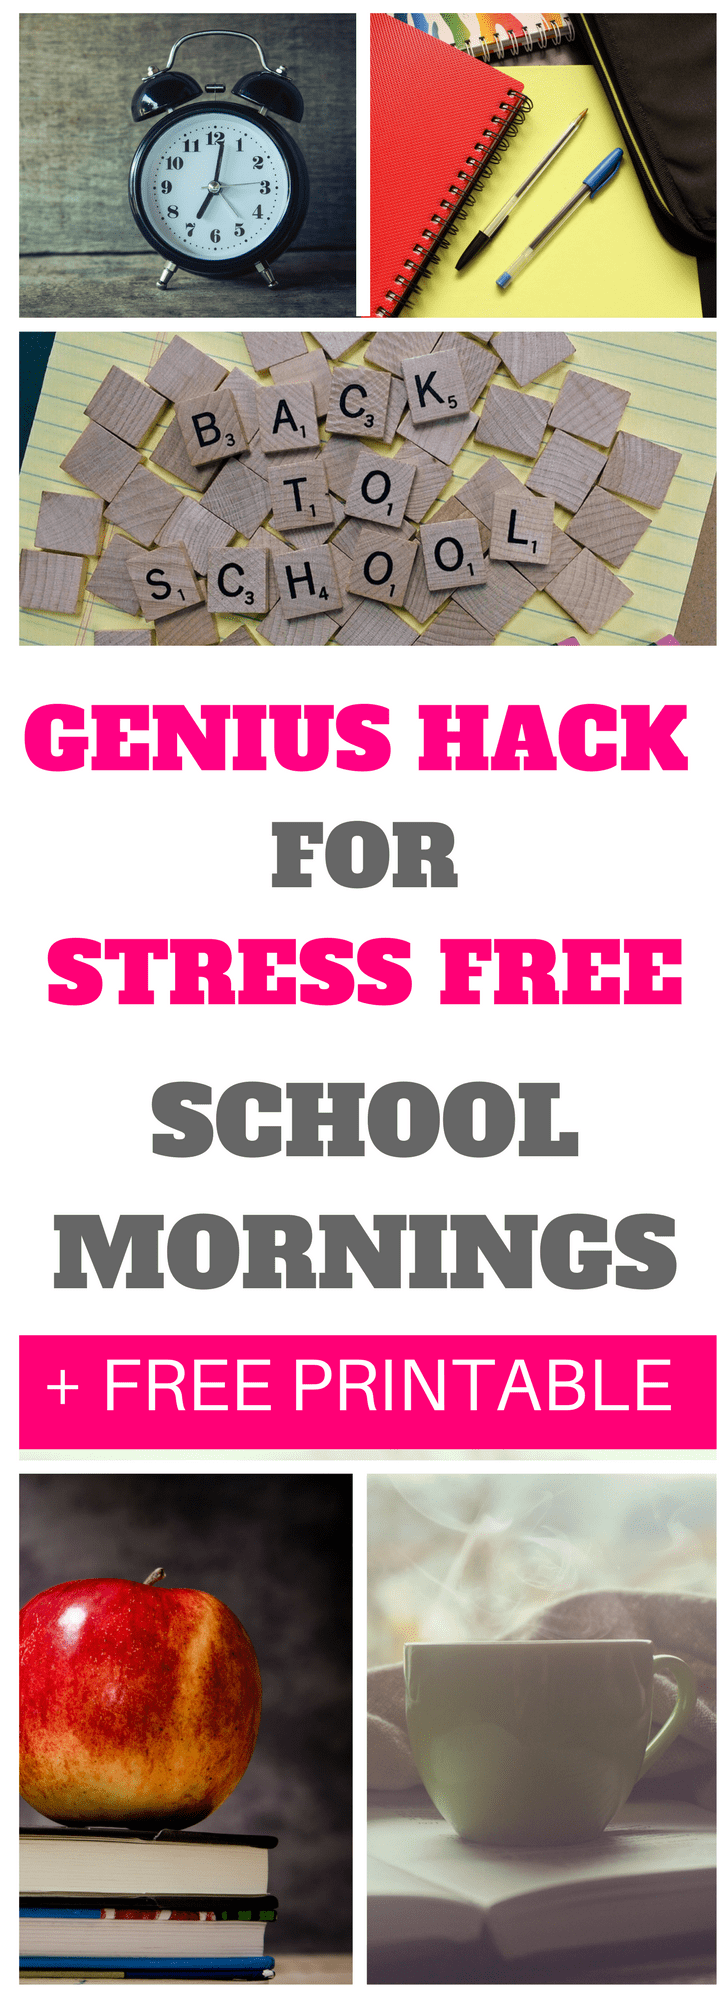 Genius Hack for stress free school mornings #schoolmornings #mum #mom #mumlife #momlife #routine #freeprintable #organisation #organization 